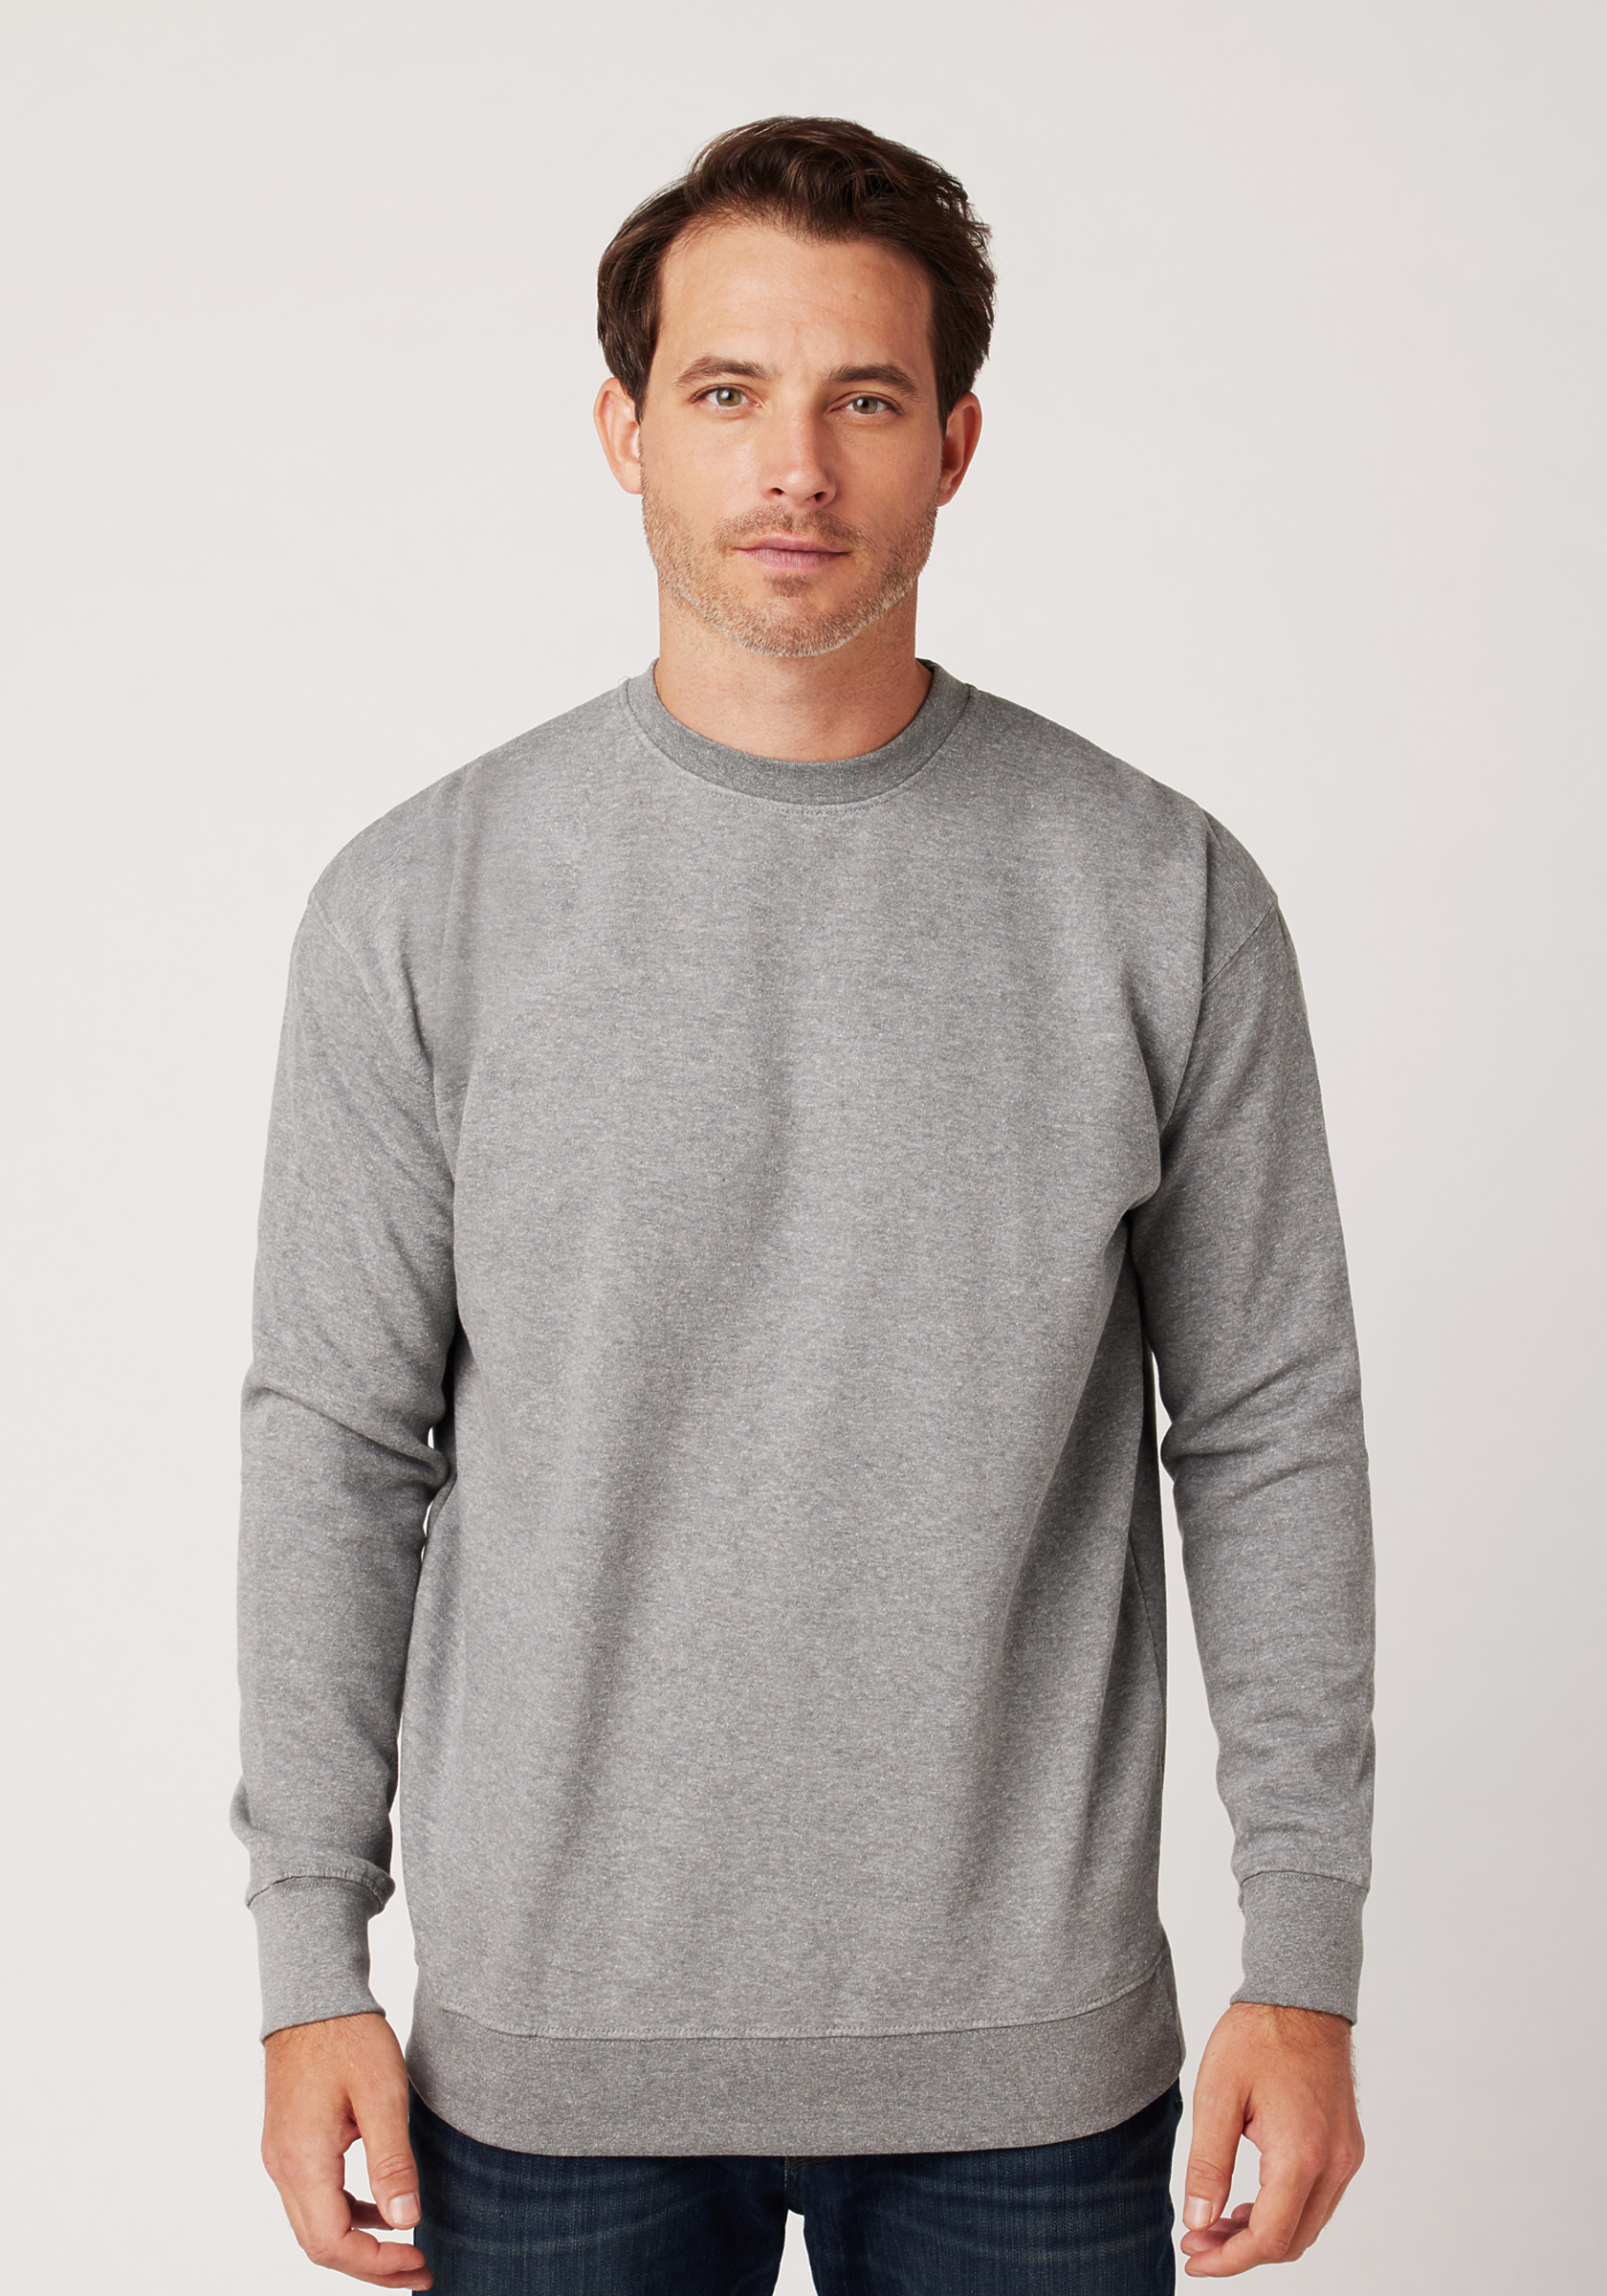 PRO 5 Men's Heavy Weight Fleece Crew neck Pullover Sweater S to 5XL - BLACK  